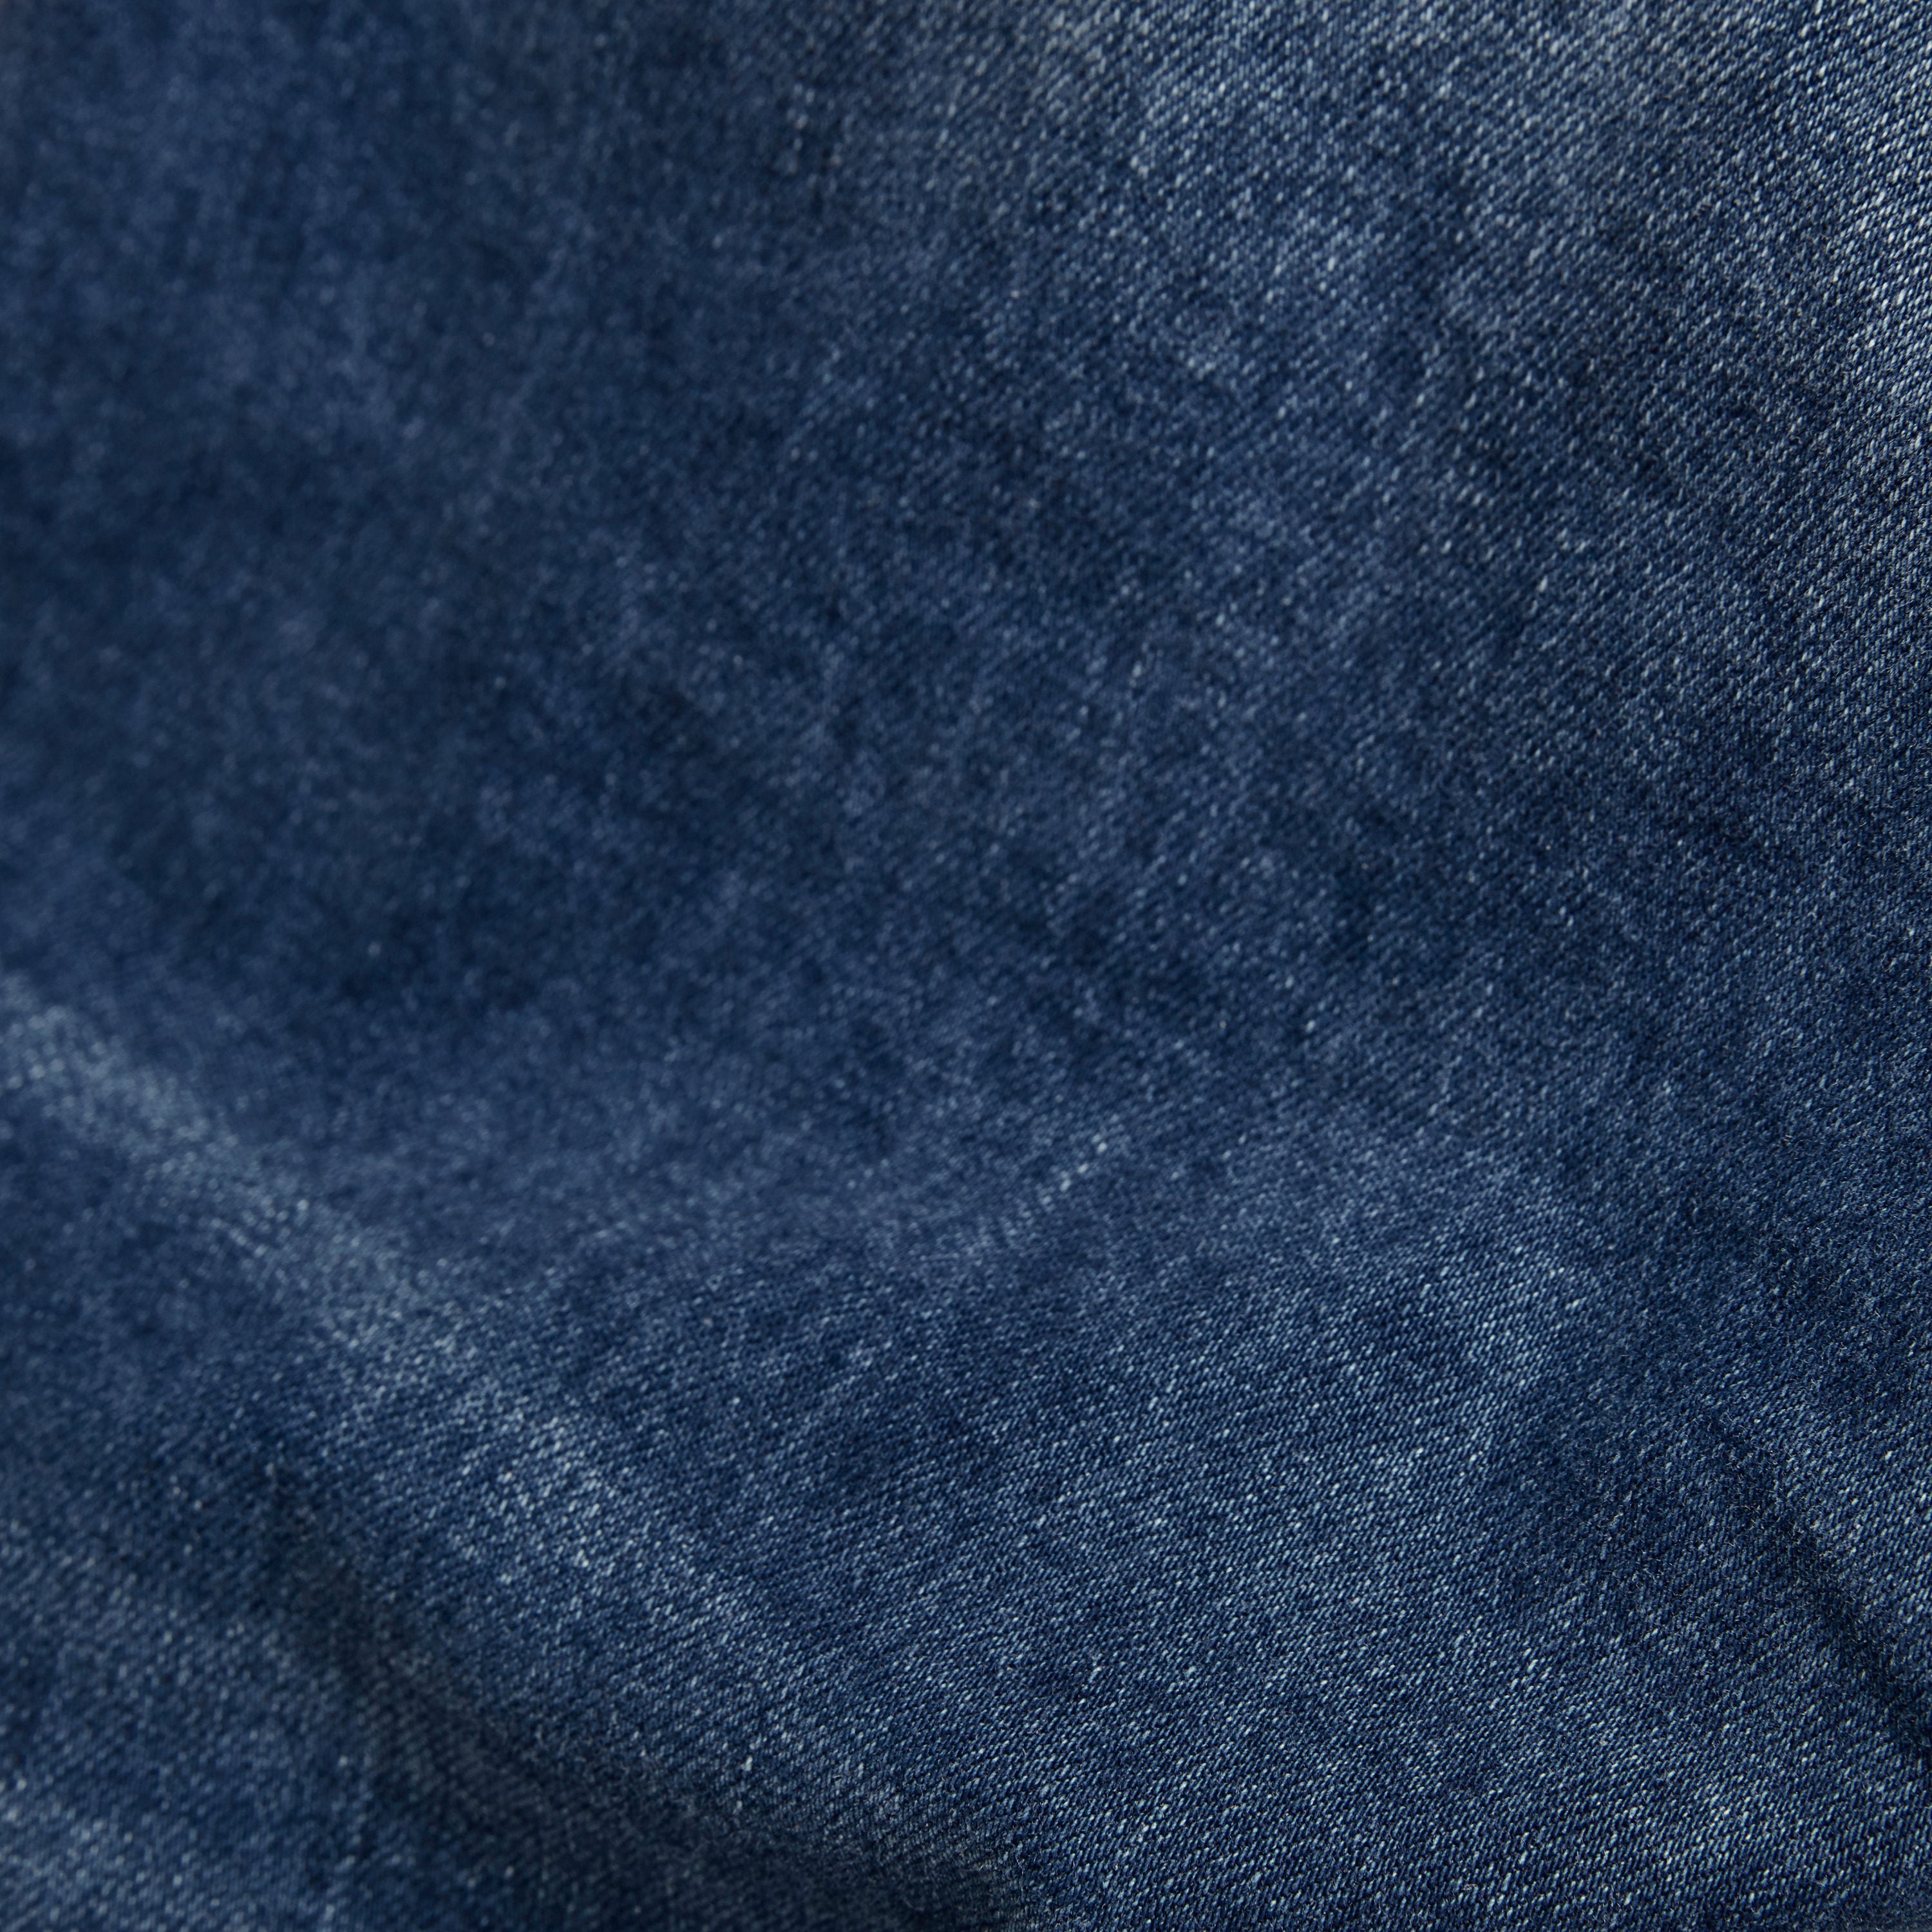 G-Star | Kate Boyfriend Jeans | A802 vintage azure